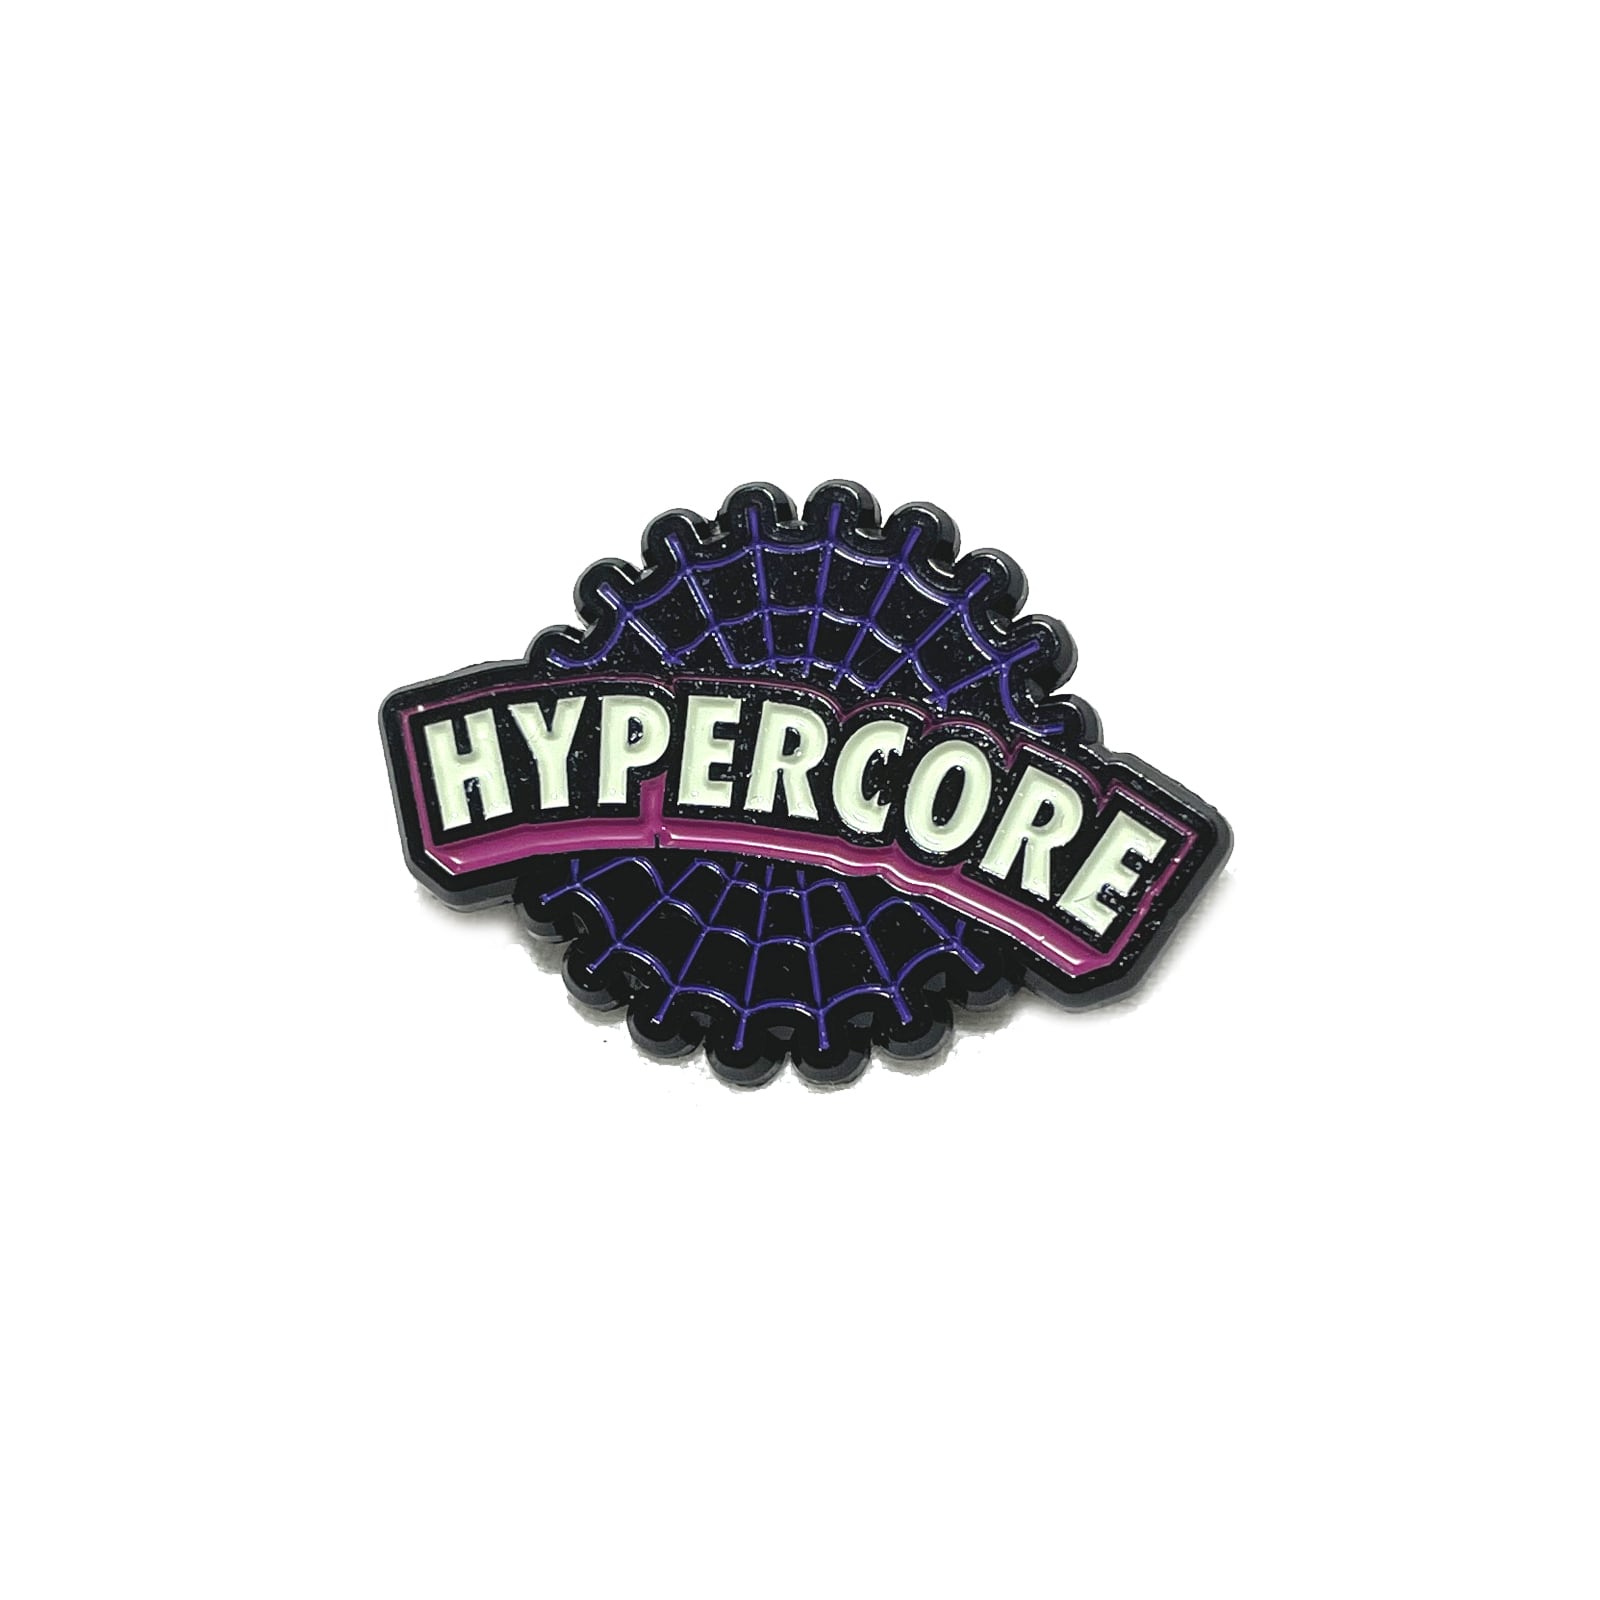 Hypercore Spider Logo Pin